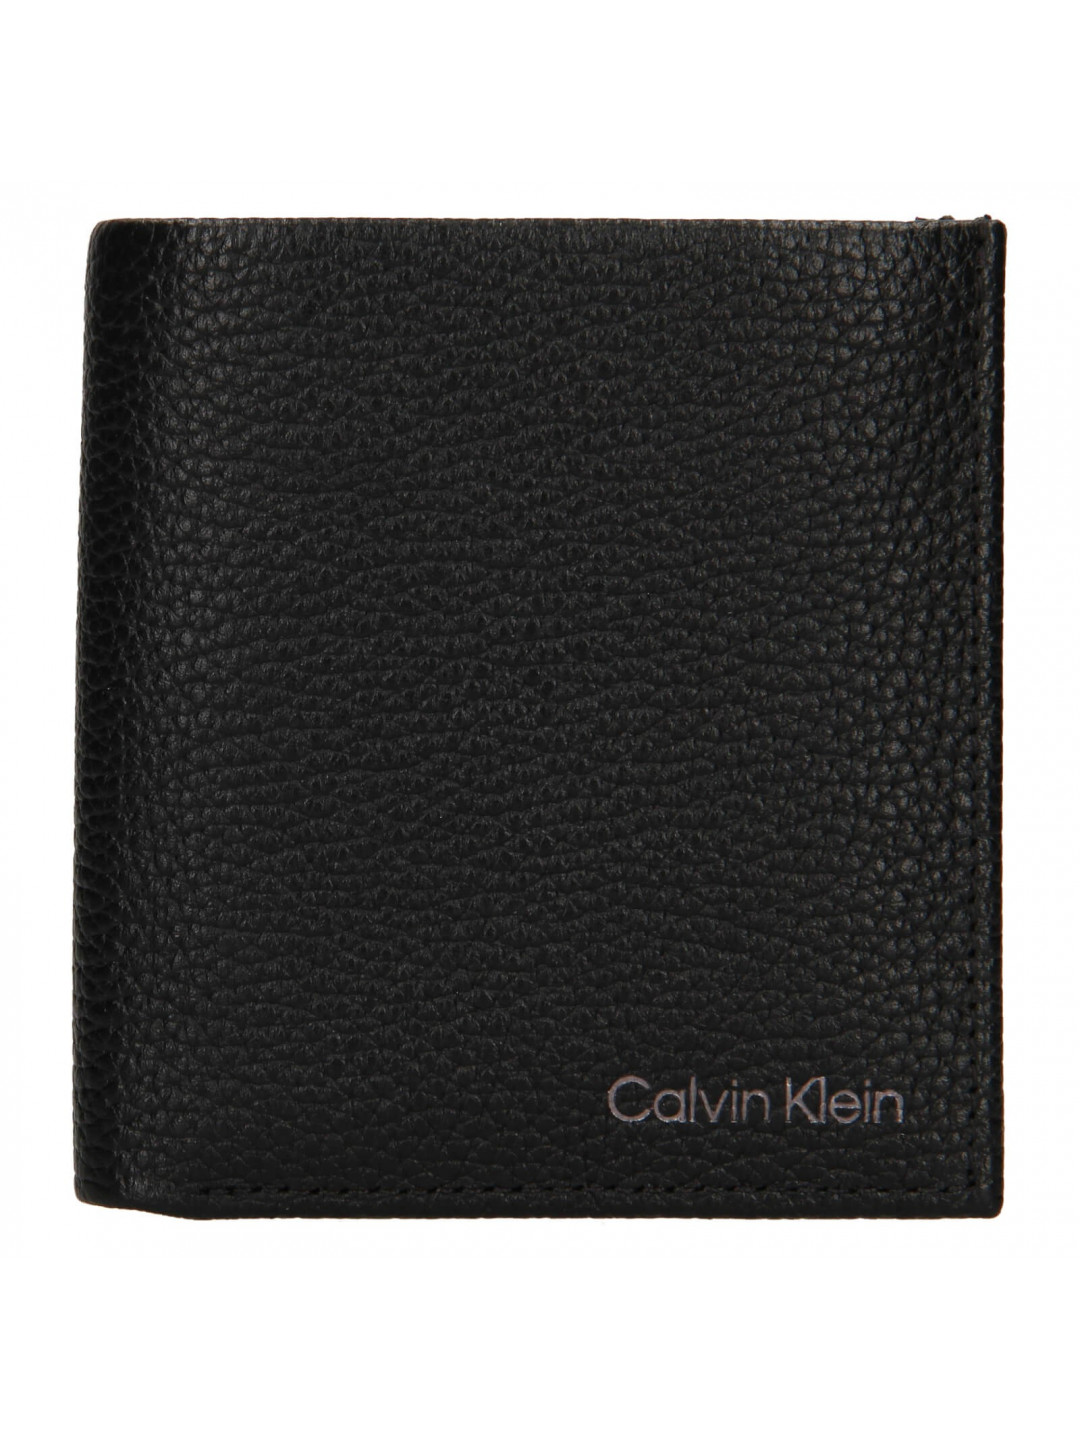 Pánská kožená peněženka Calvin Klein Mano – černá